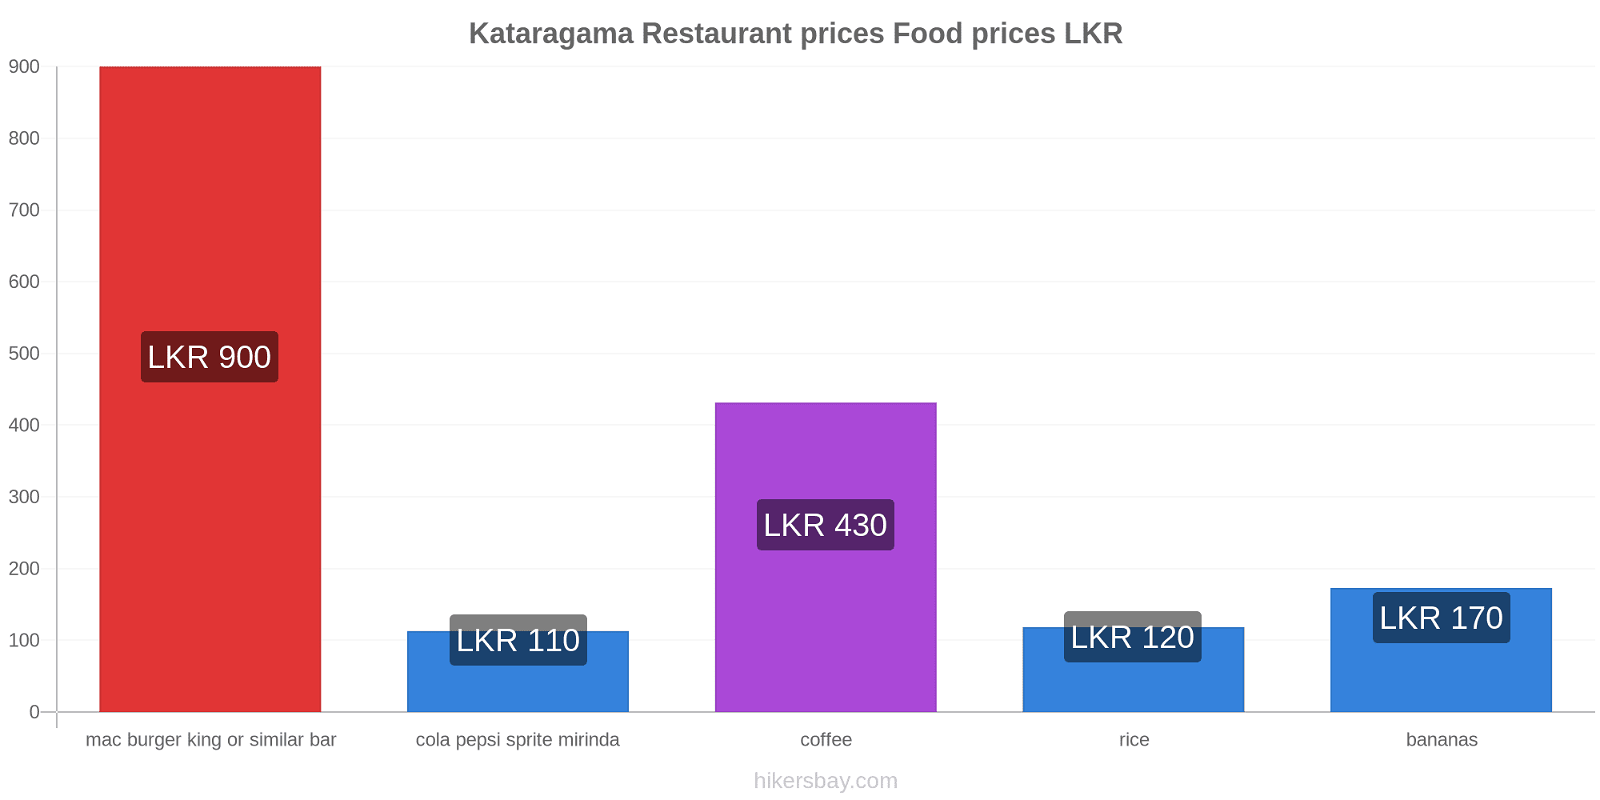 Kataragama price changes hikersbay.com